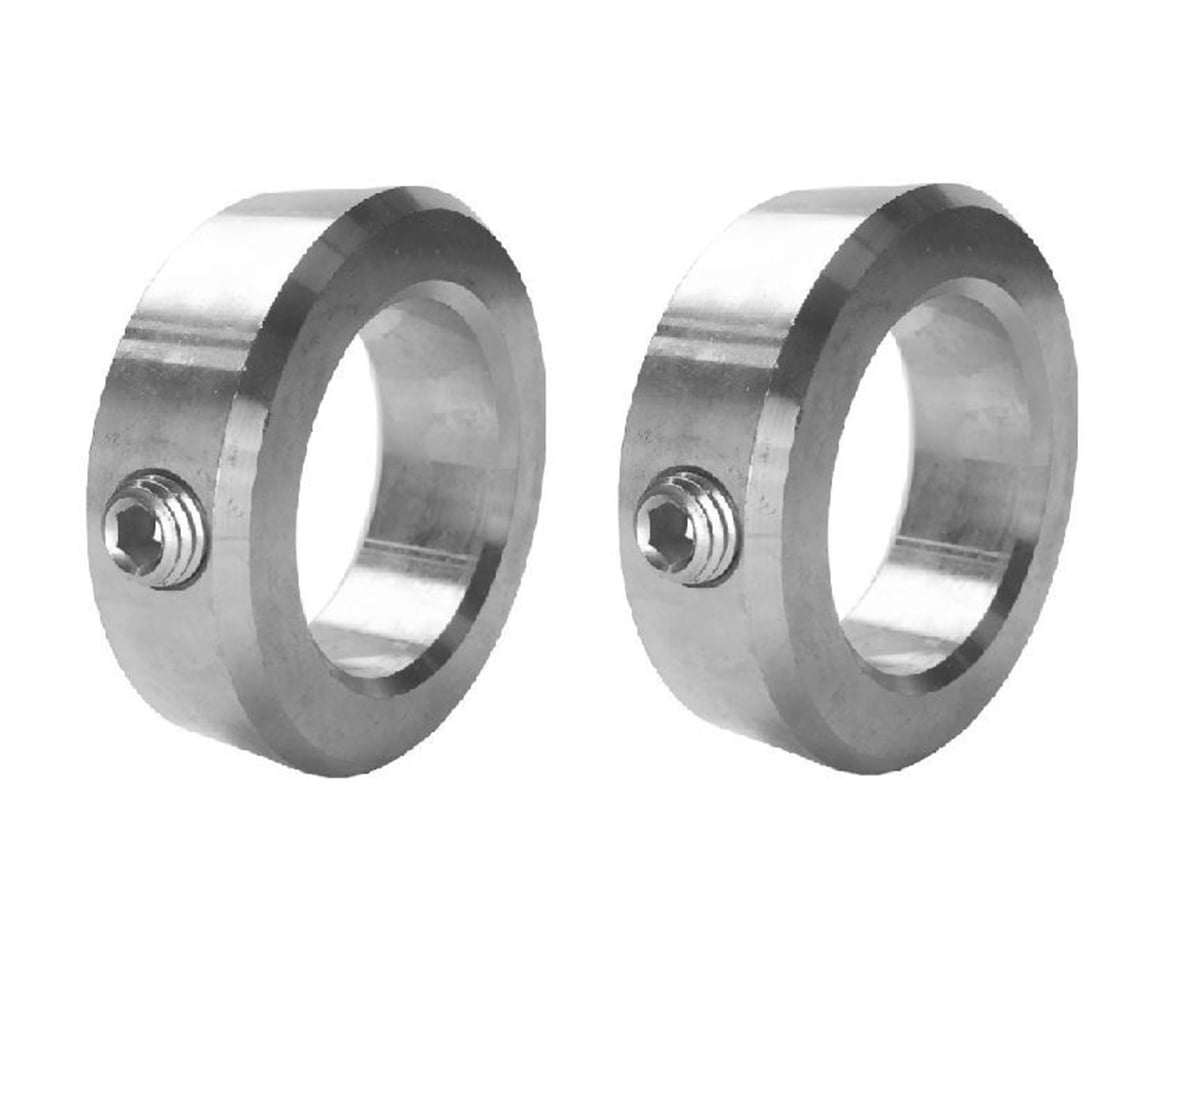 Zinc Plated SC-031 5/16" Inch Solid Shaft Stop Collar Set Screw 10pcs 